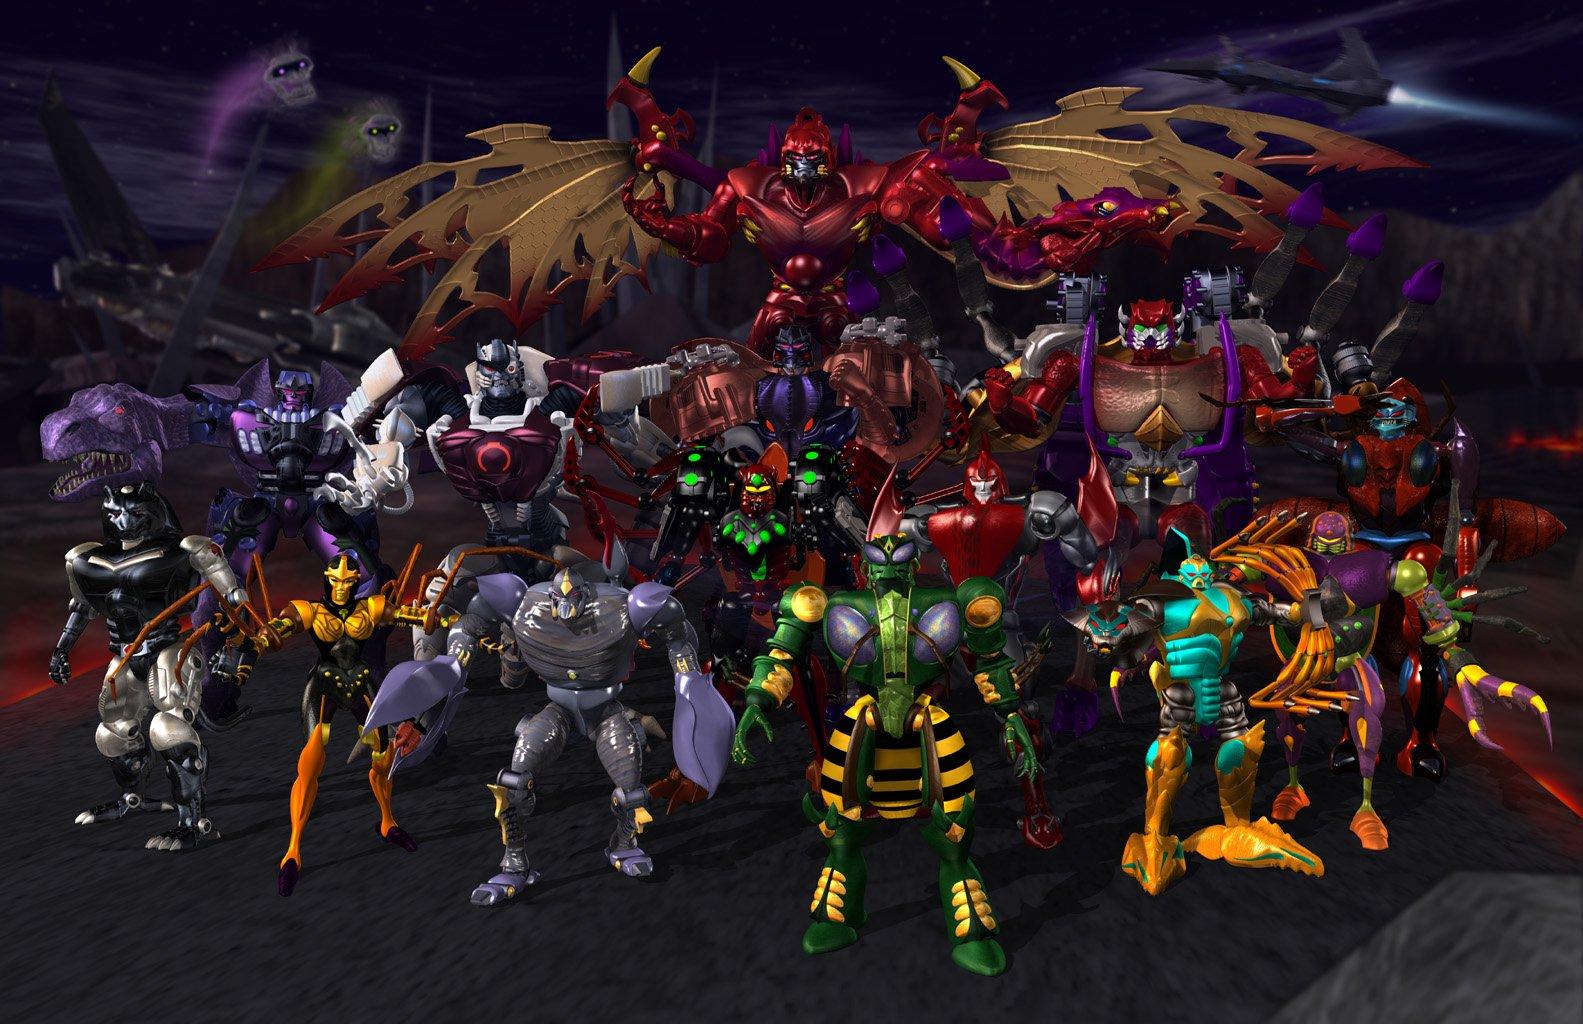 Beast Wars: Transformers Wallpaper